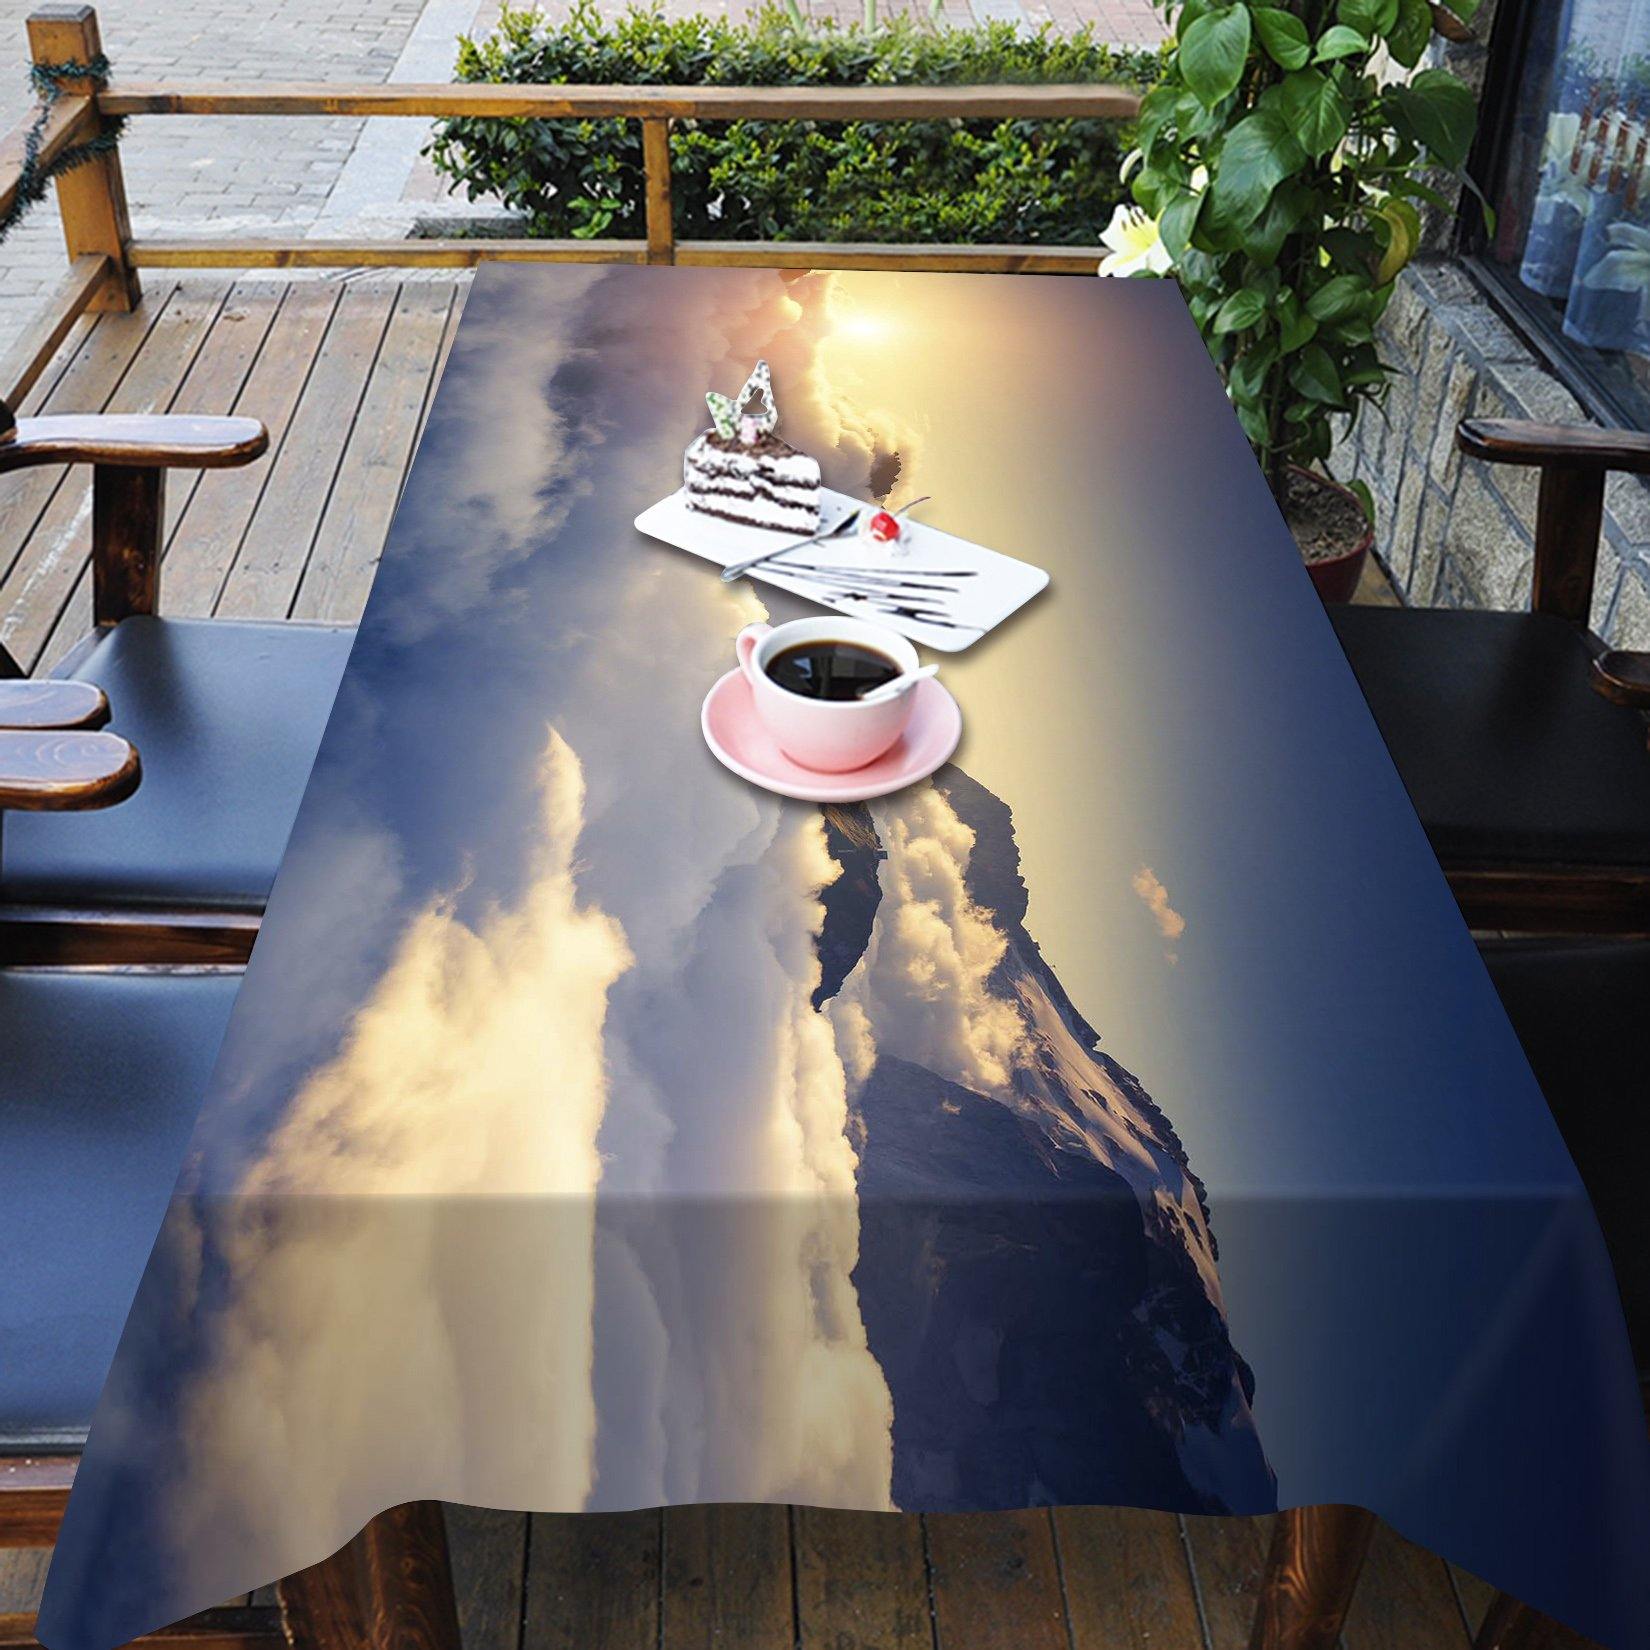 3D Sunrise Clouds 187 Tablecloths Wallpaper AJ Wallpaper 